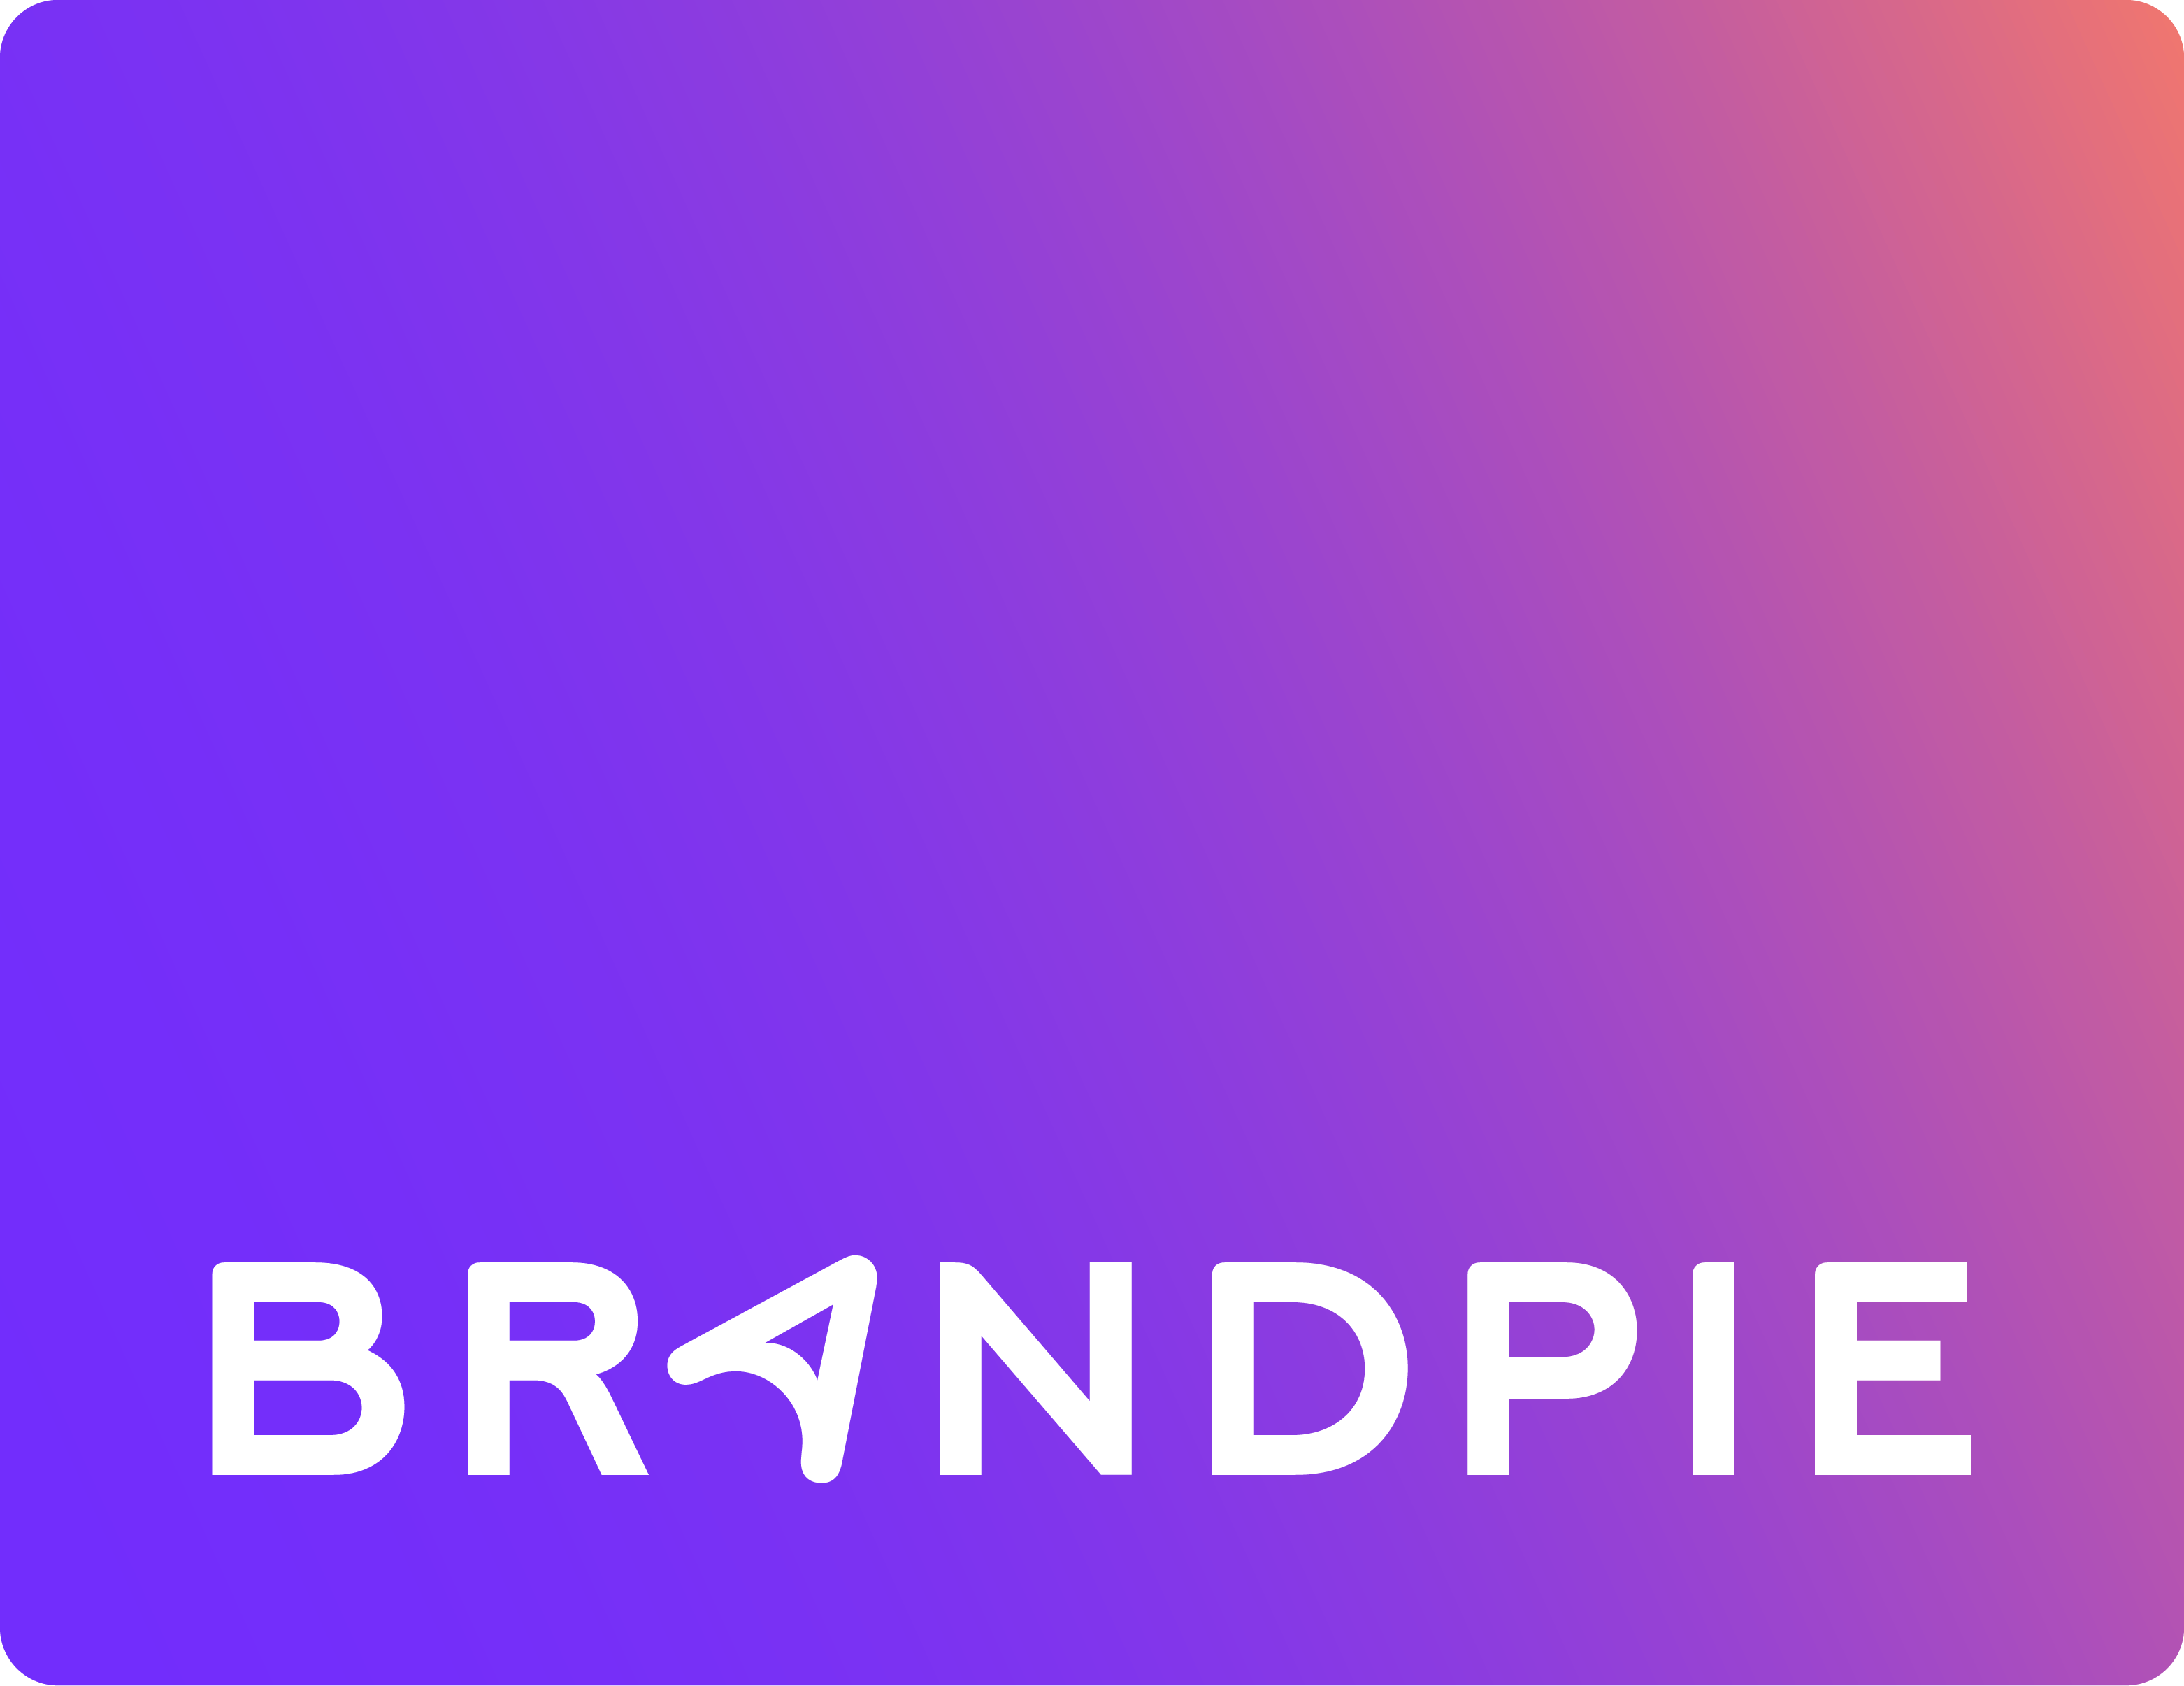 BRANDPIE logo on a gradient background from purple to orange.